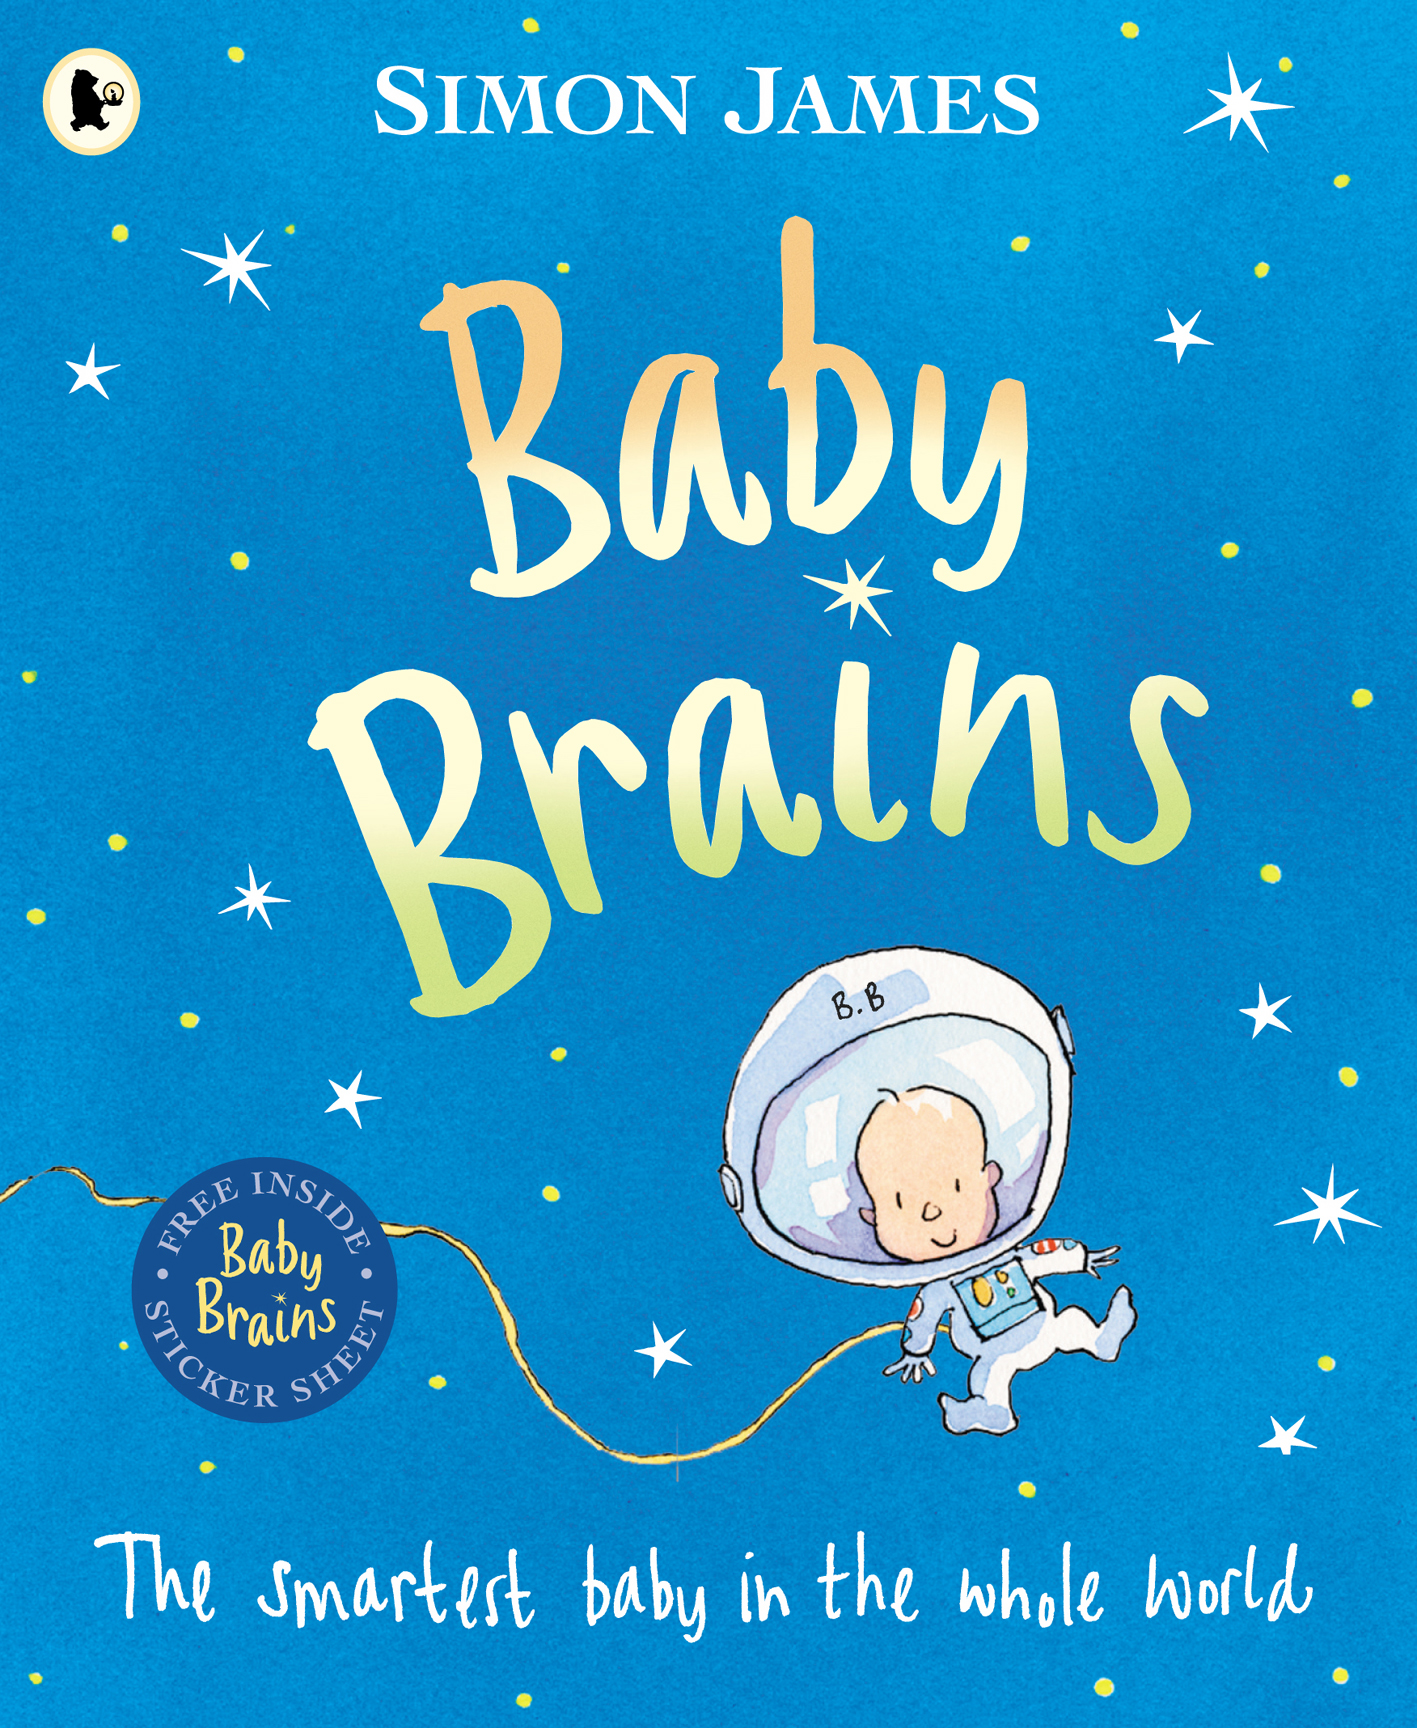 Baby-Brains